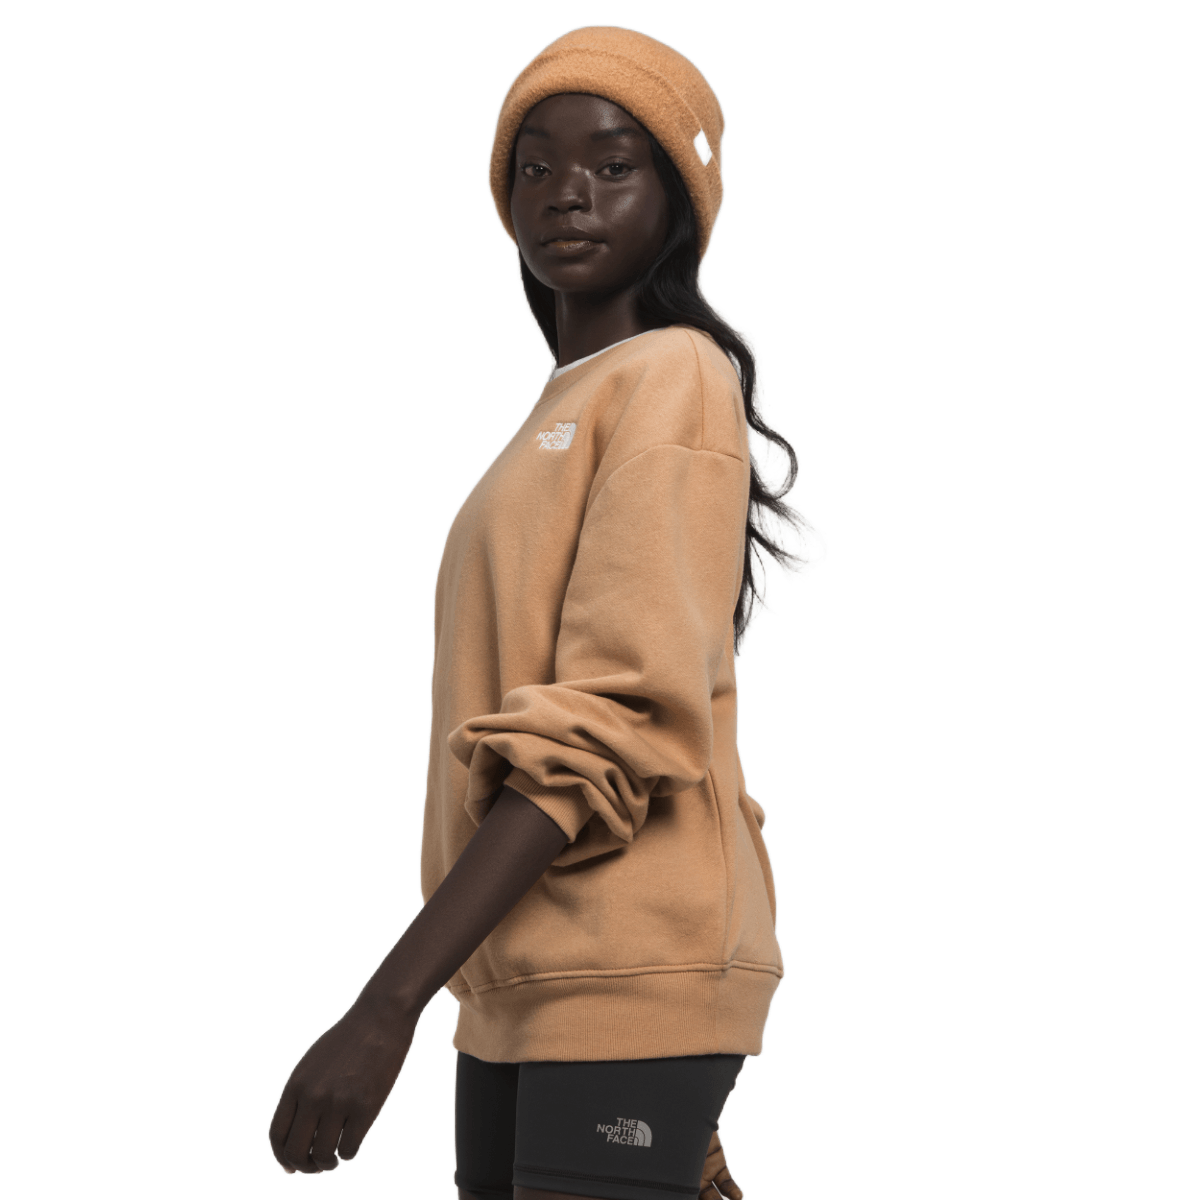 The North Face Size W Small Women's Sweatshirt – Rambleraven Gear Trader